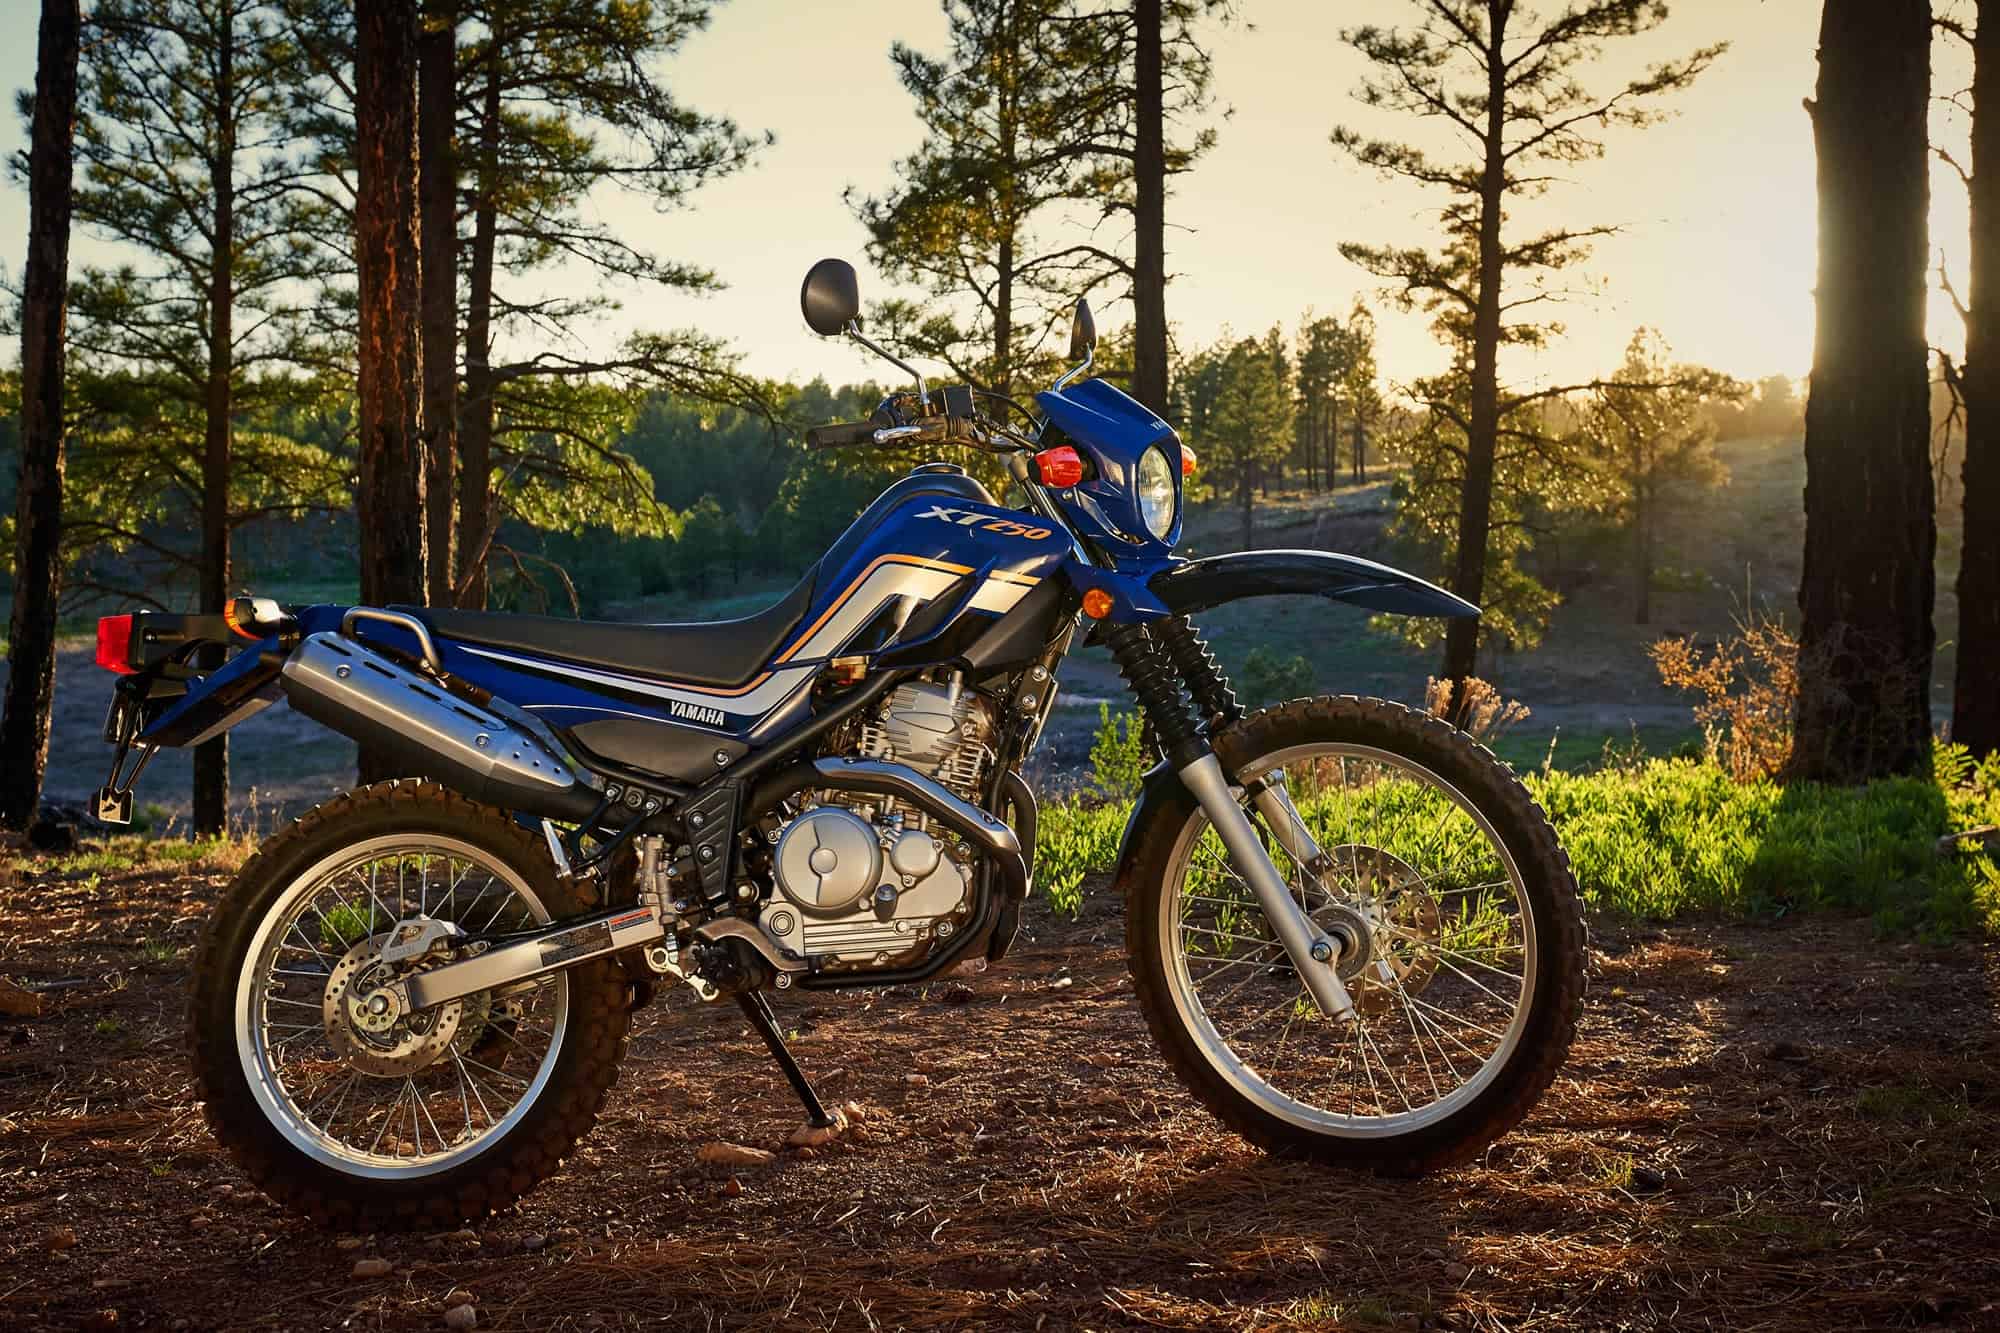 Unleash your spirit of adventure with this versatile dual-purpose motorcycle